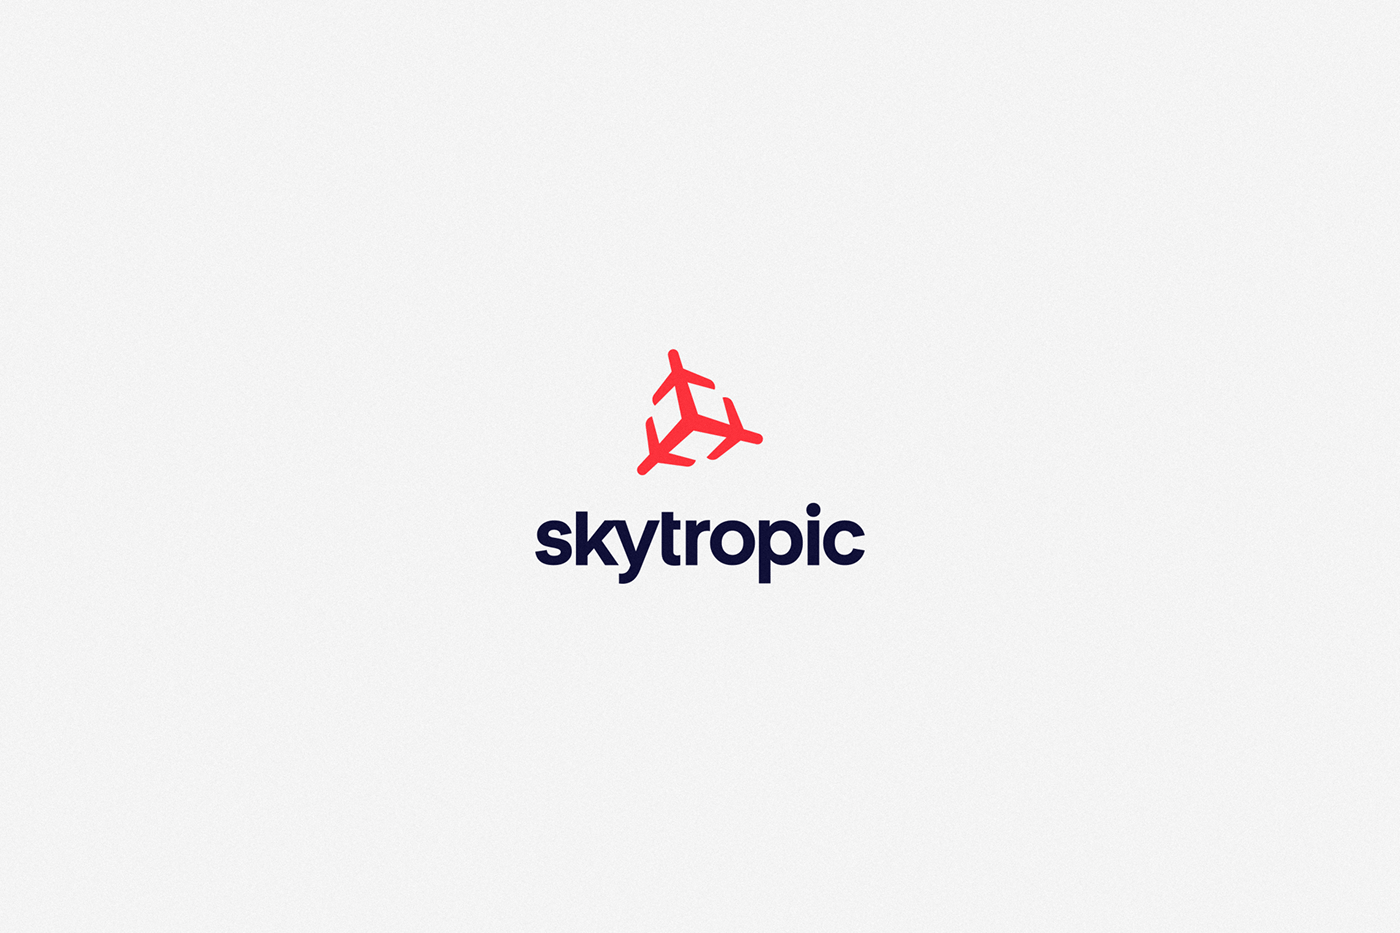 brand branding  logo airplane plane tourism Travel trip vacation